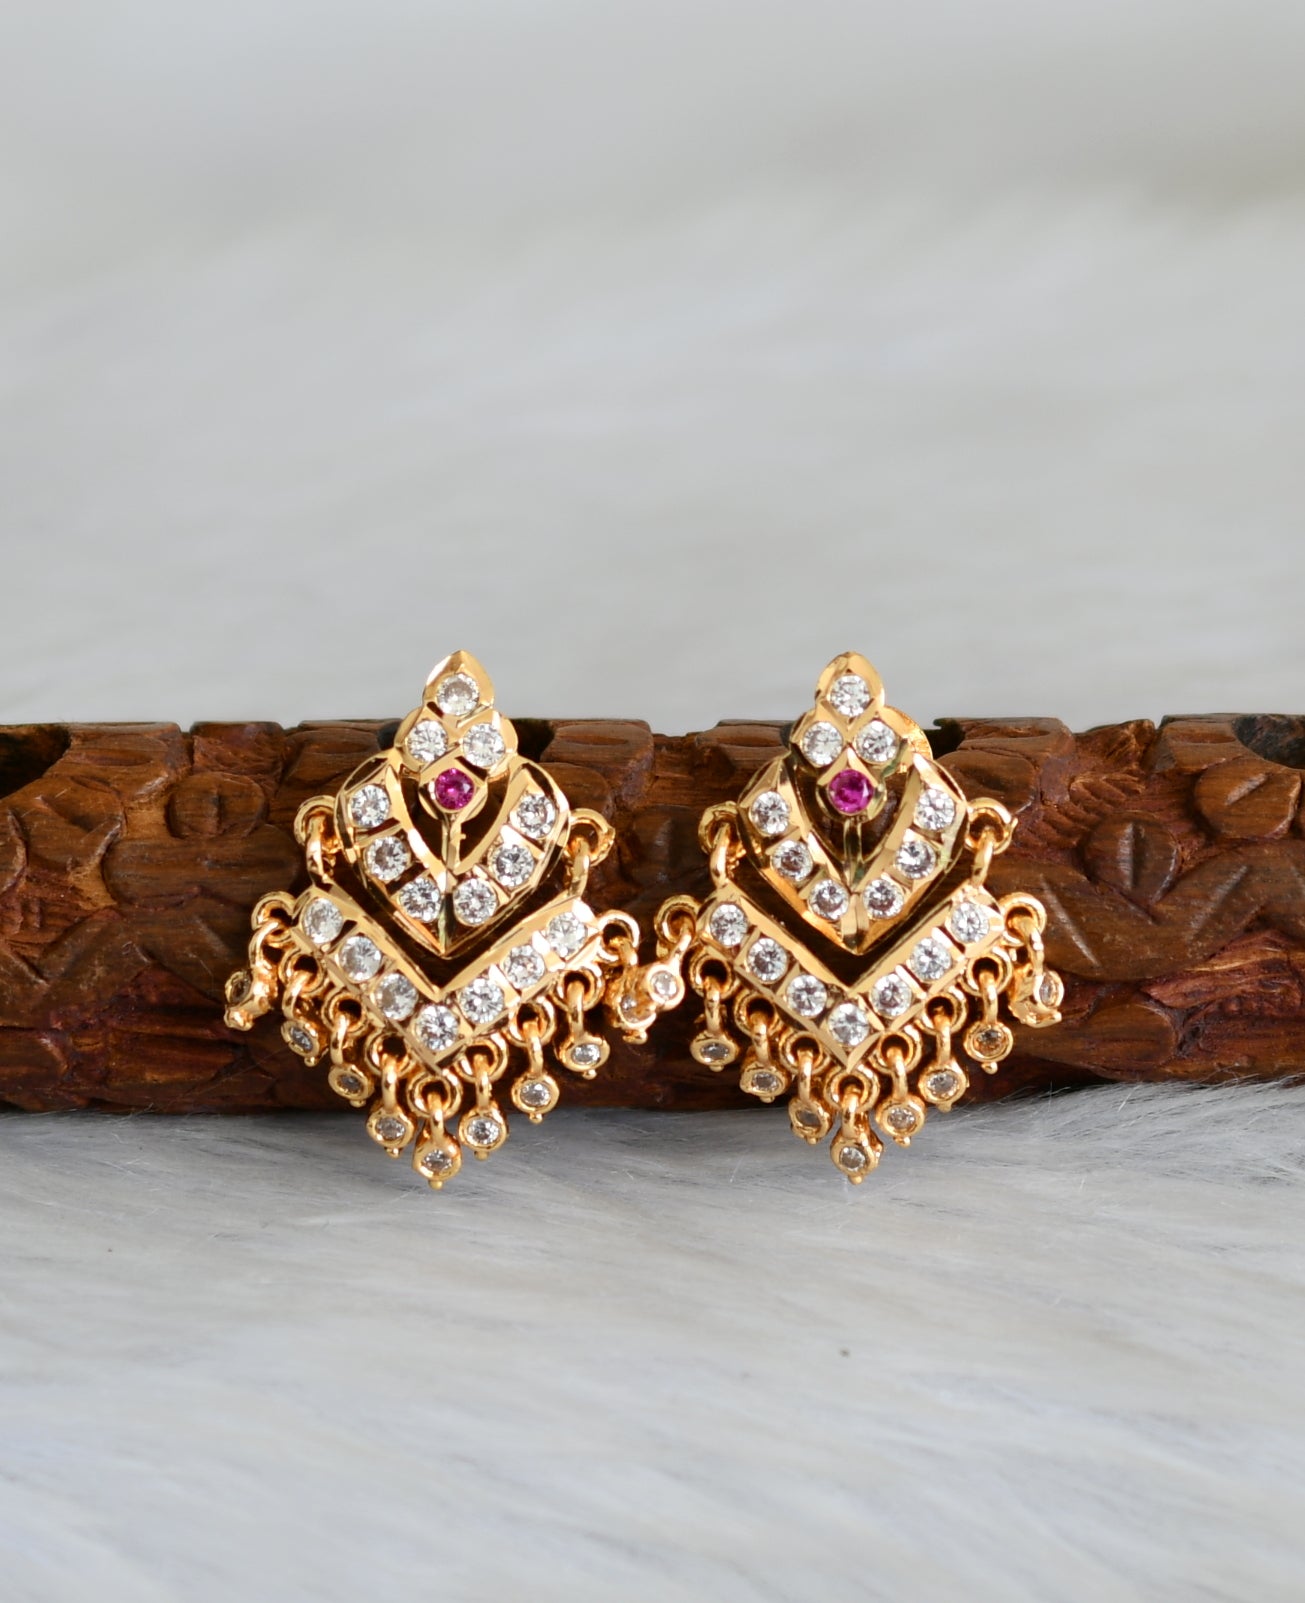 Antique Gold Kundan Earrings Designs 2019 - YouTube